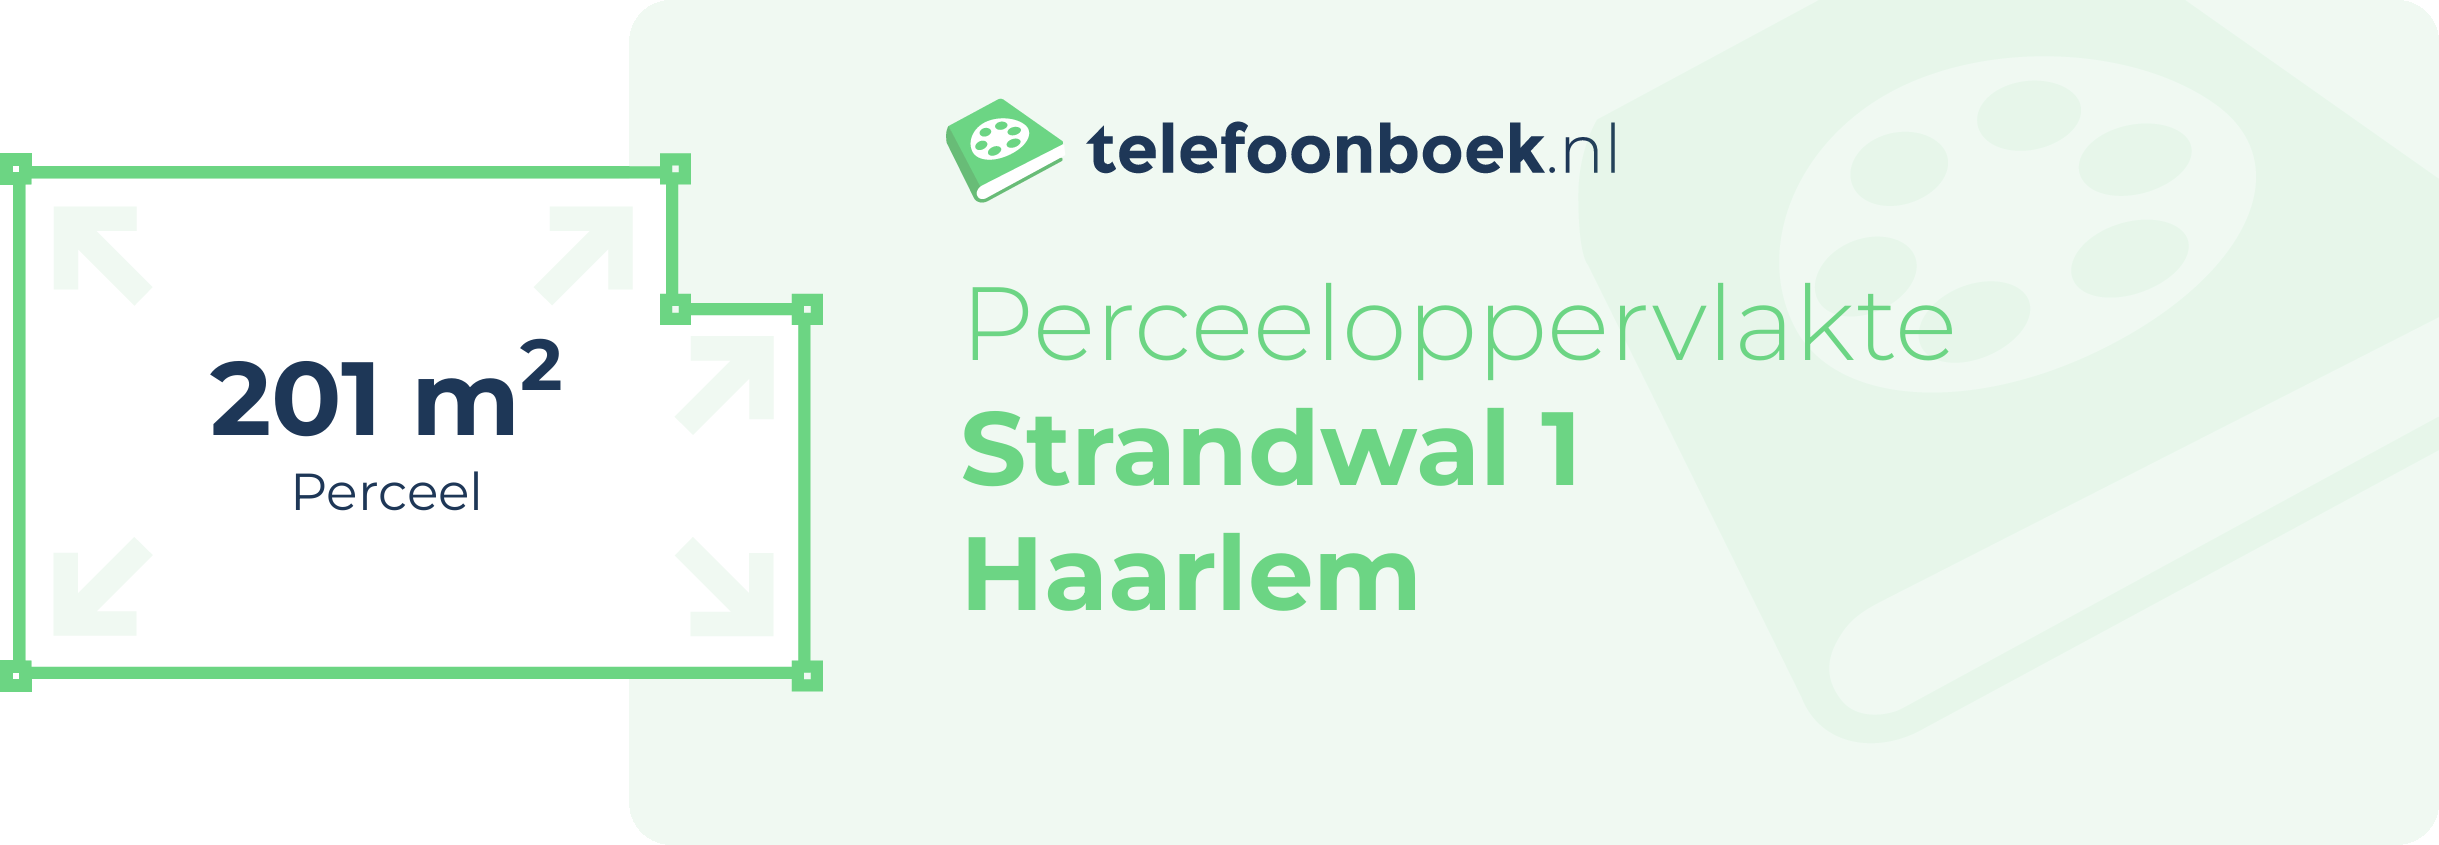 Perceeloppervlakte Strandwal 1 Haarlem